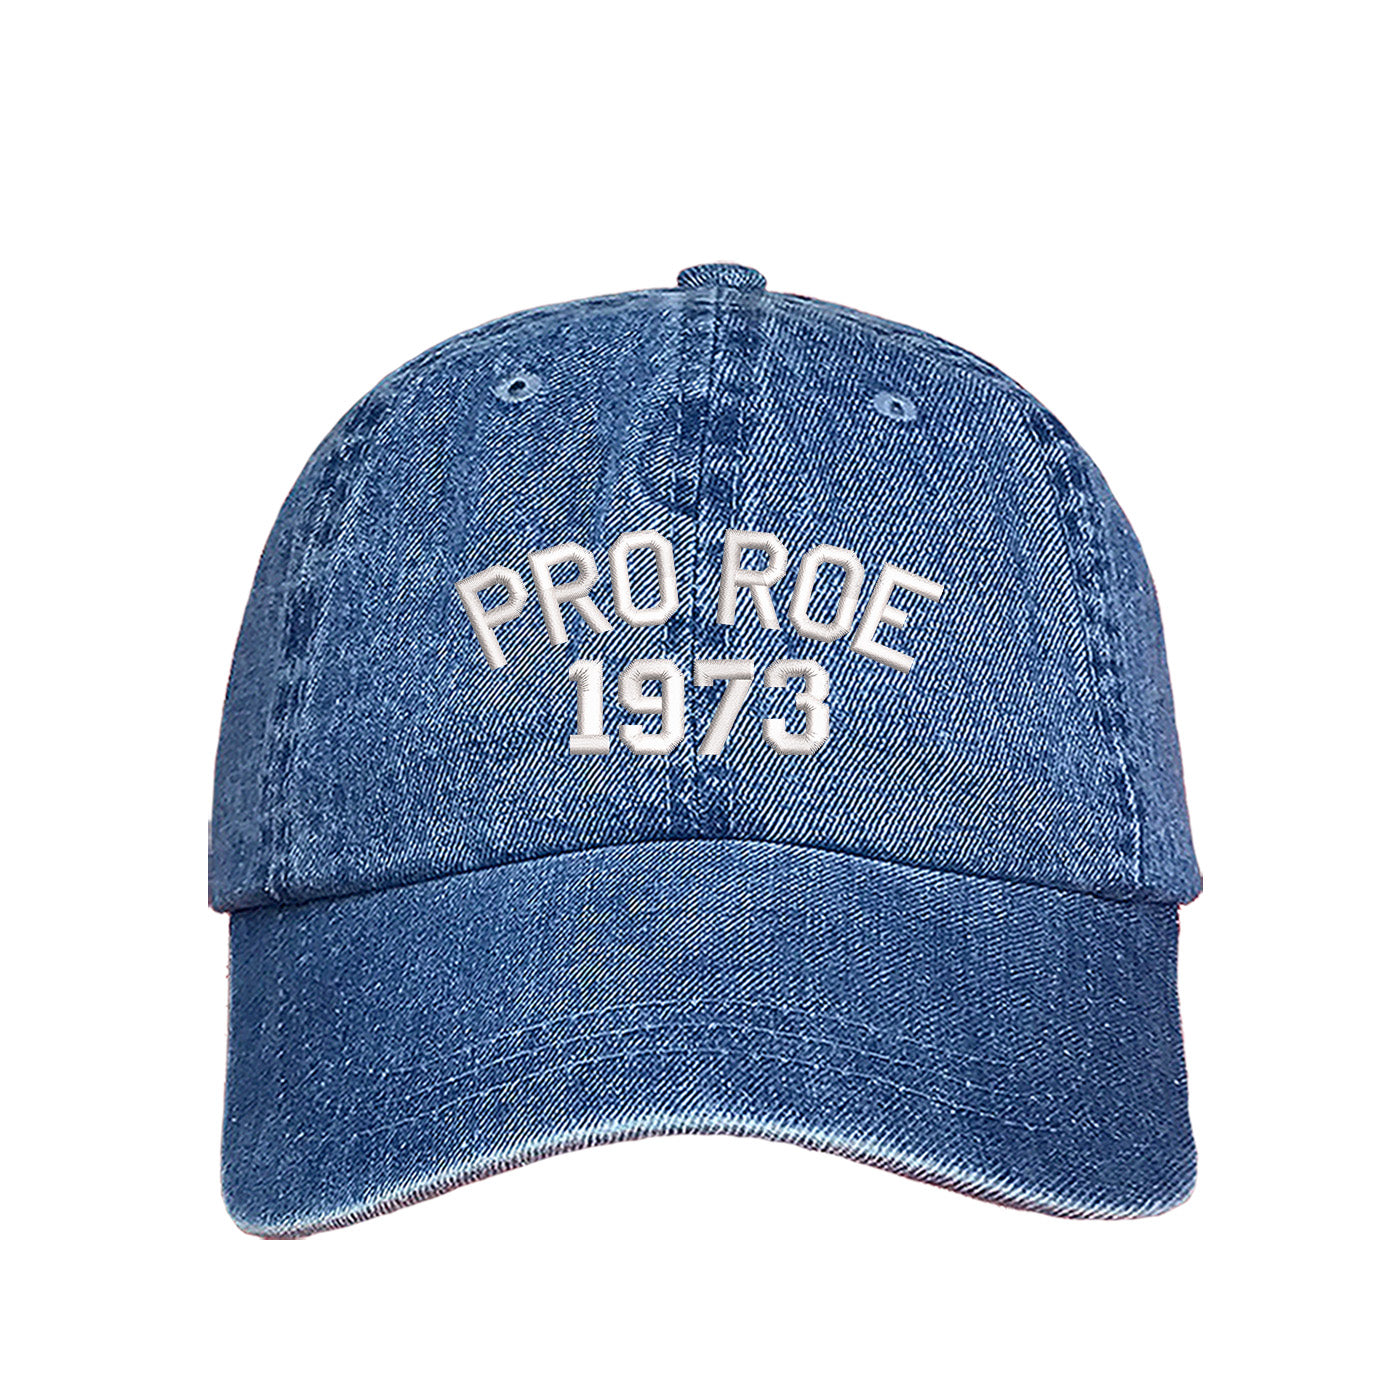 Pro Roe 1973 Light Denim Embroidered Baseball Cap - DSY Lifesetyle